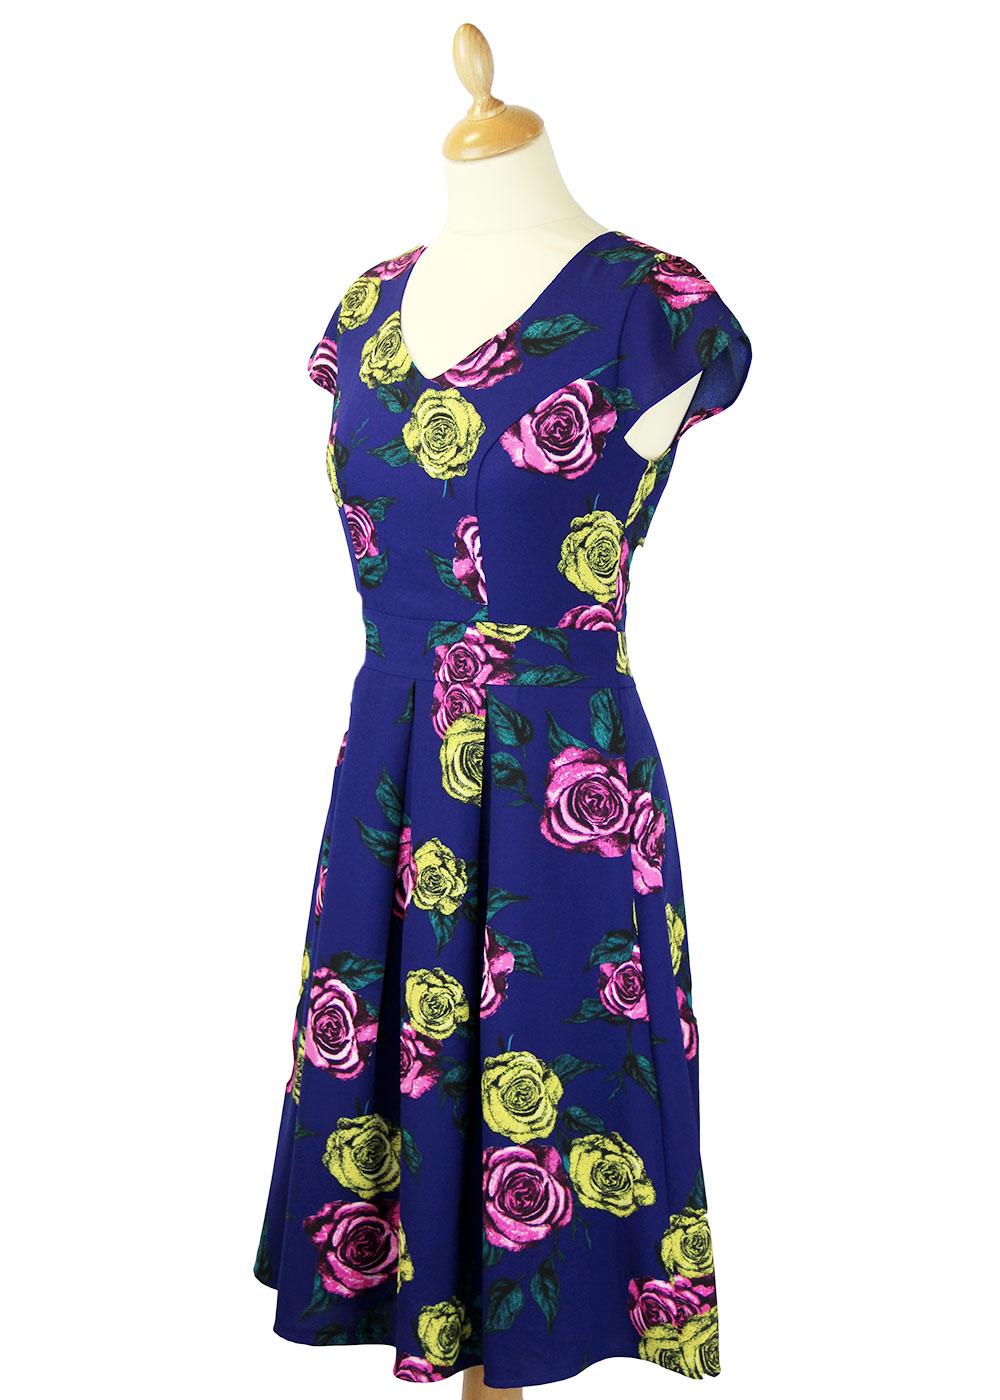 DARLING Talia Retro 60s Floral Vintage Style Tea Dress in Shadow